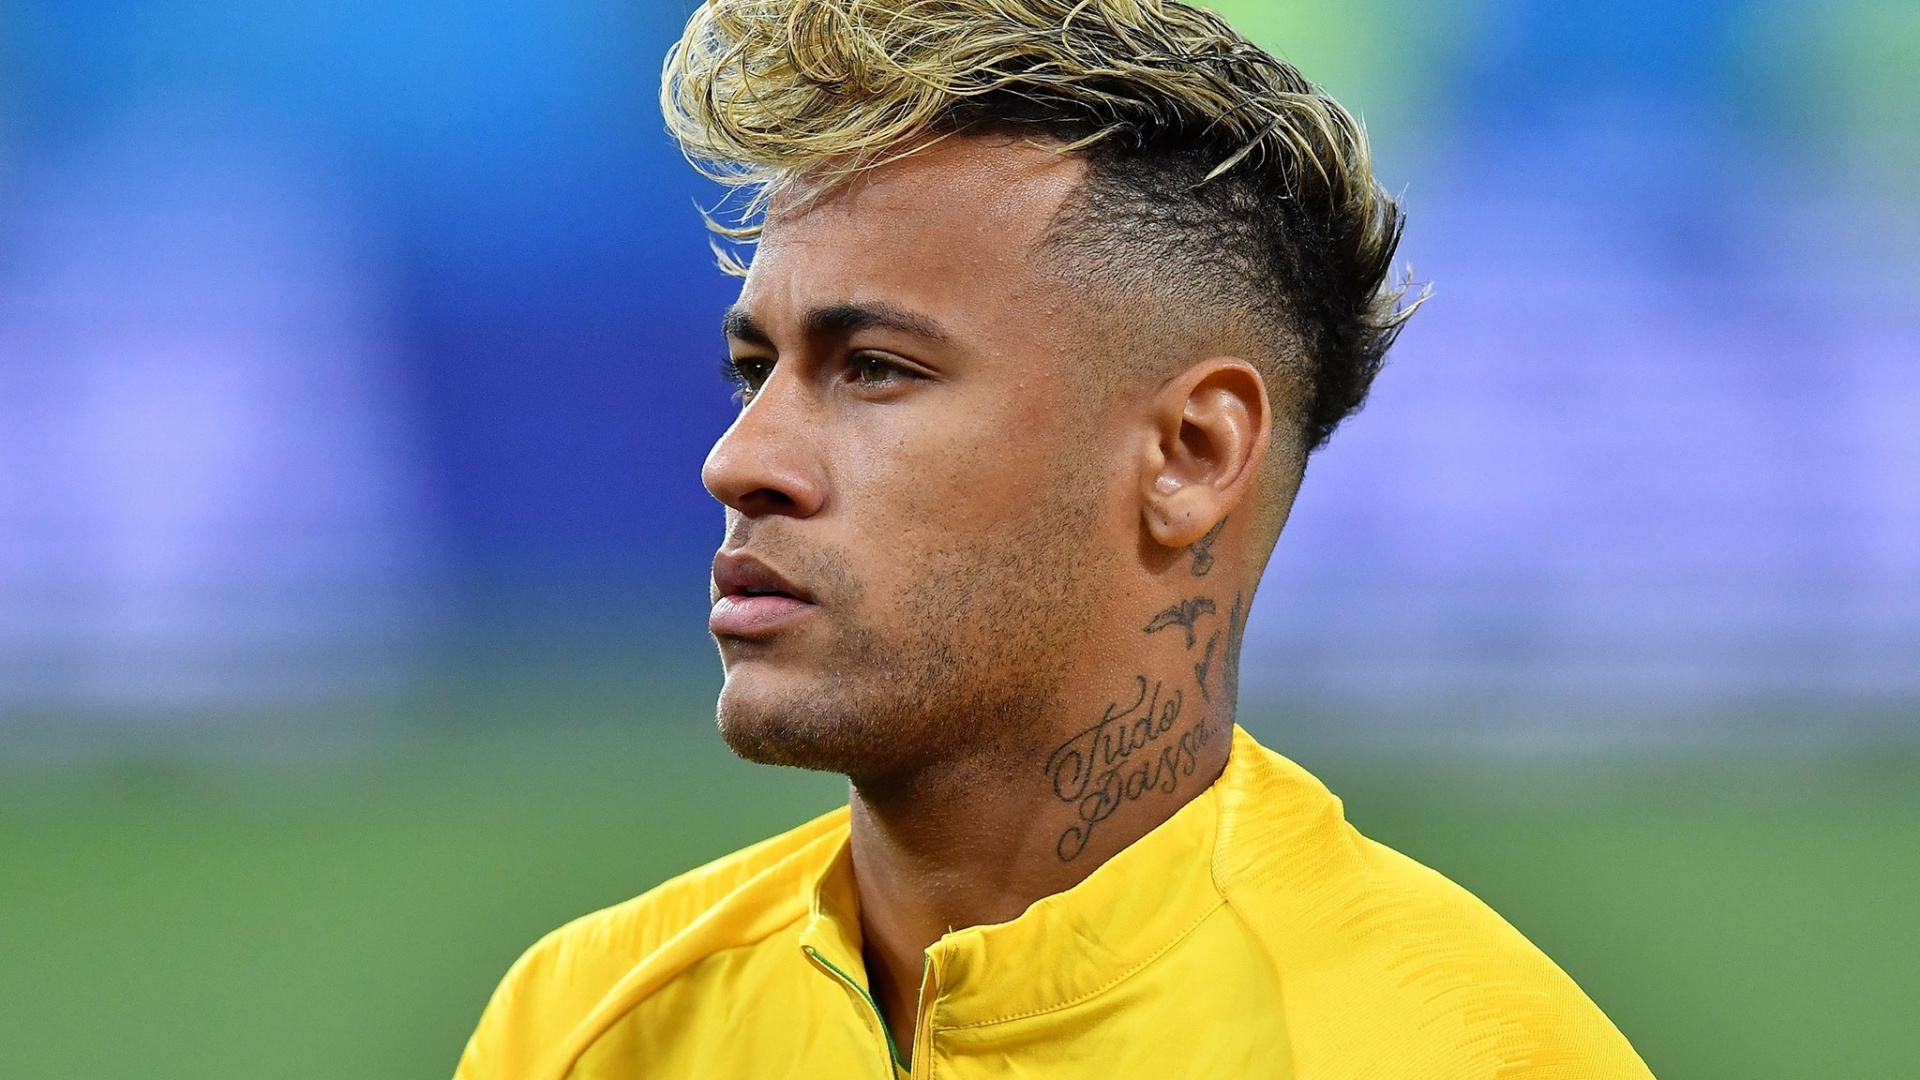 foto neymar jr wallpaper,hair,hairstyle,chin,forehead,football player